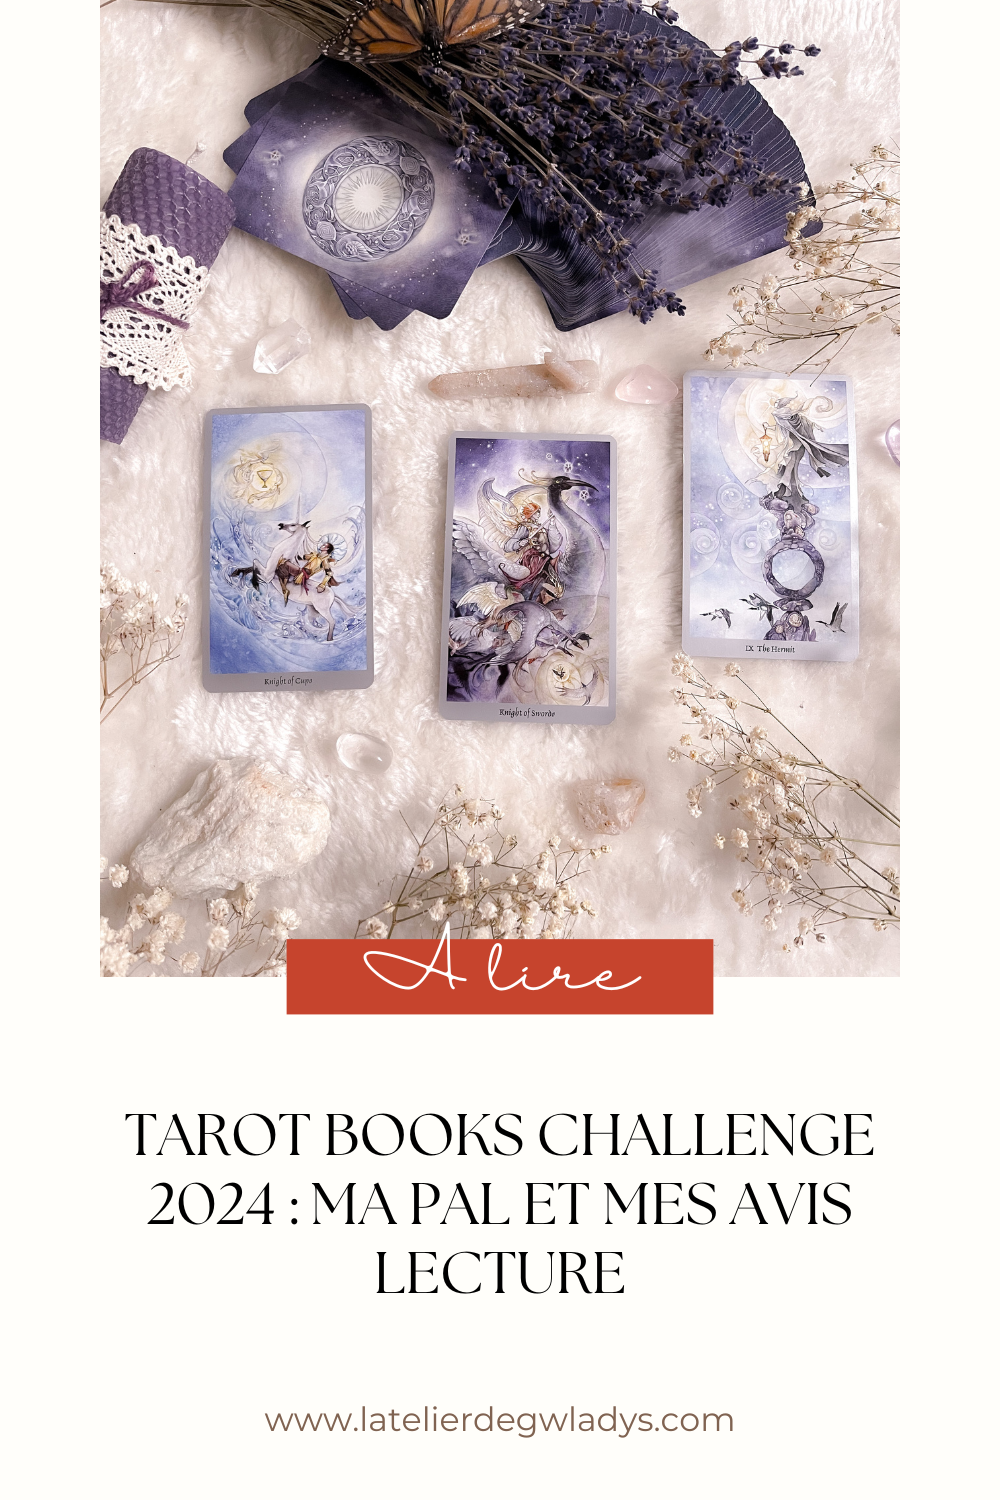 Epingle 4 - Tarot Books challenge 2024 ma pal avis lecture.png